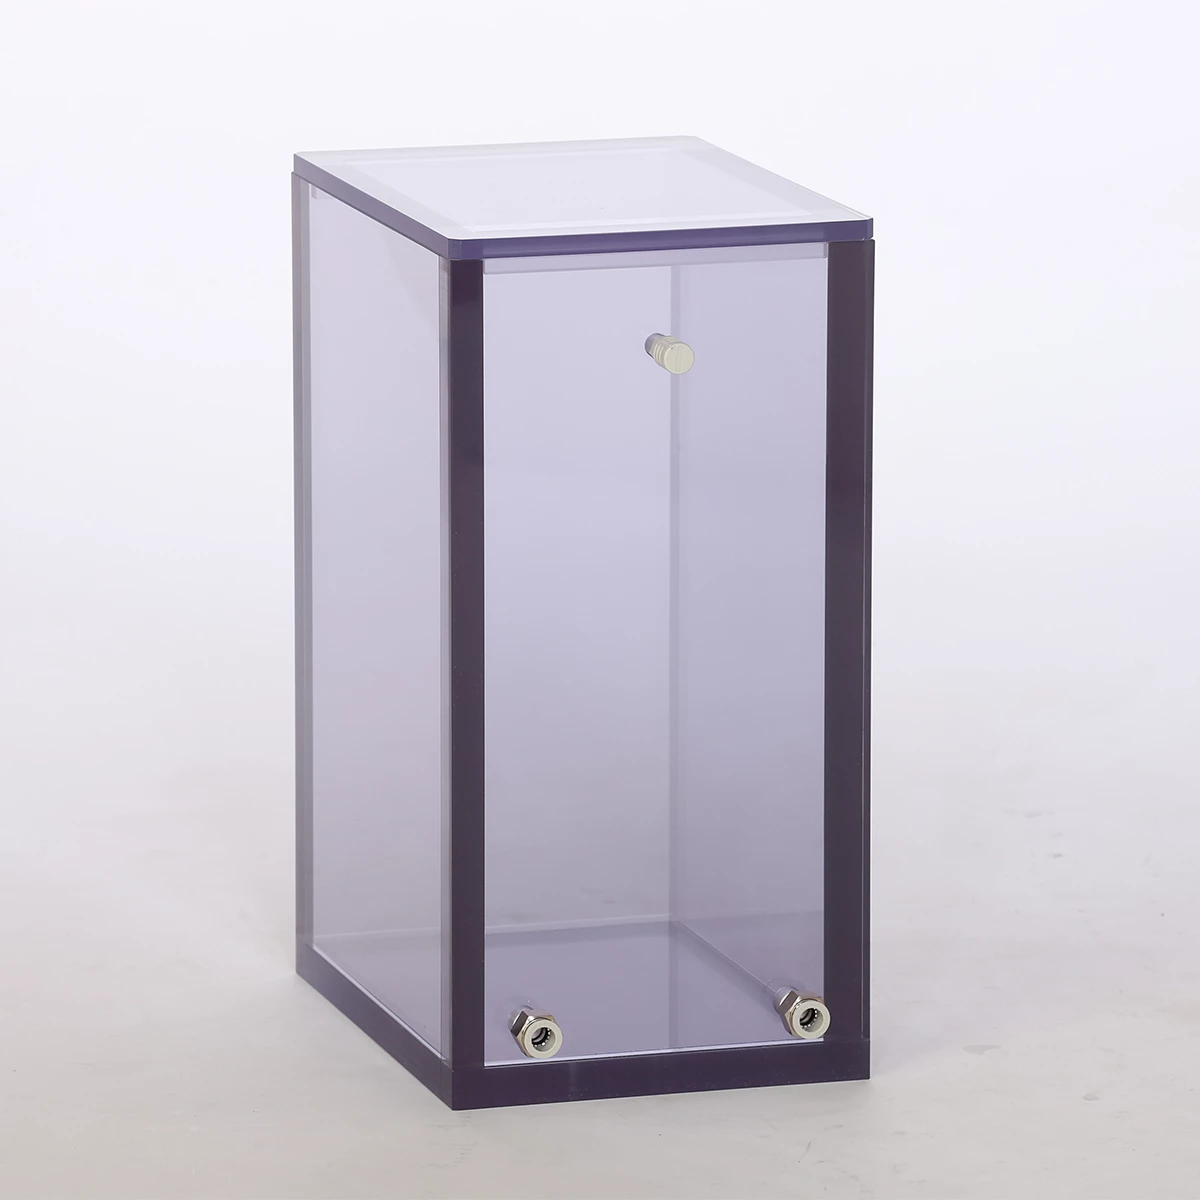 Plexiglas water tank for research